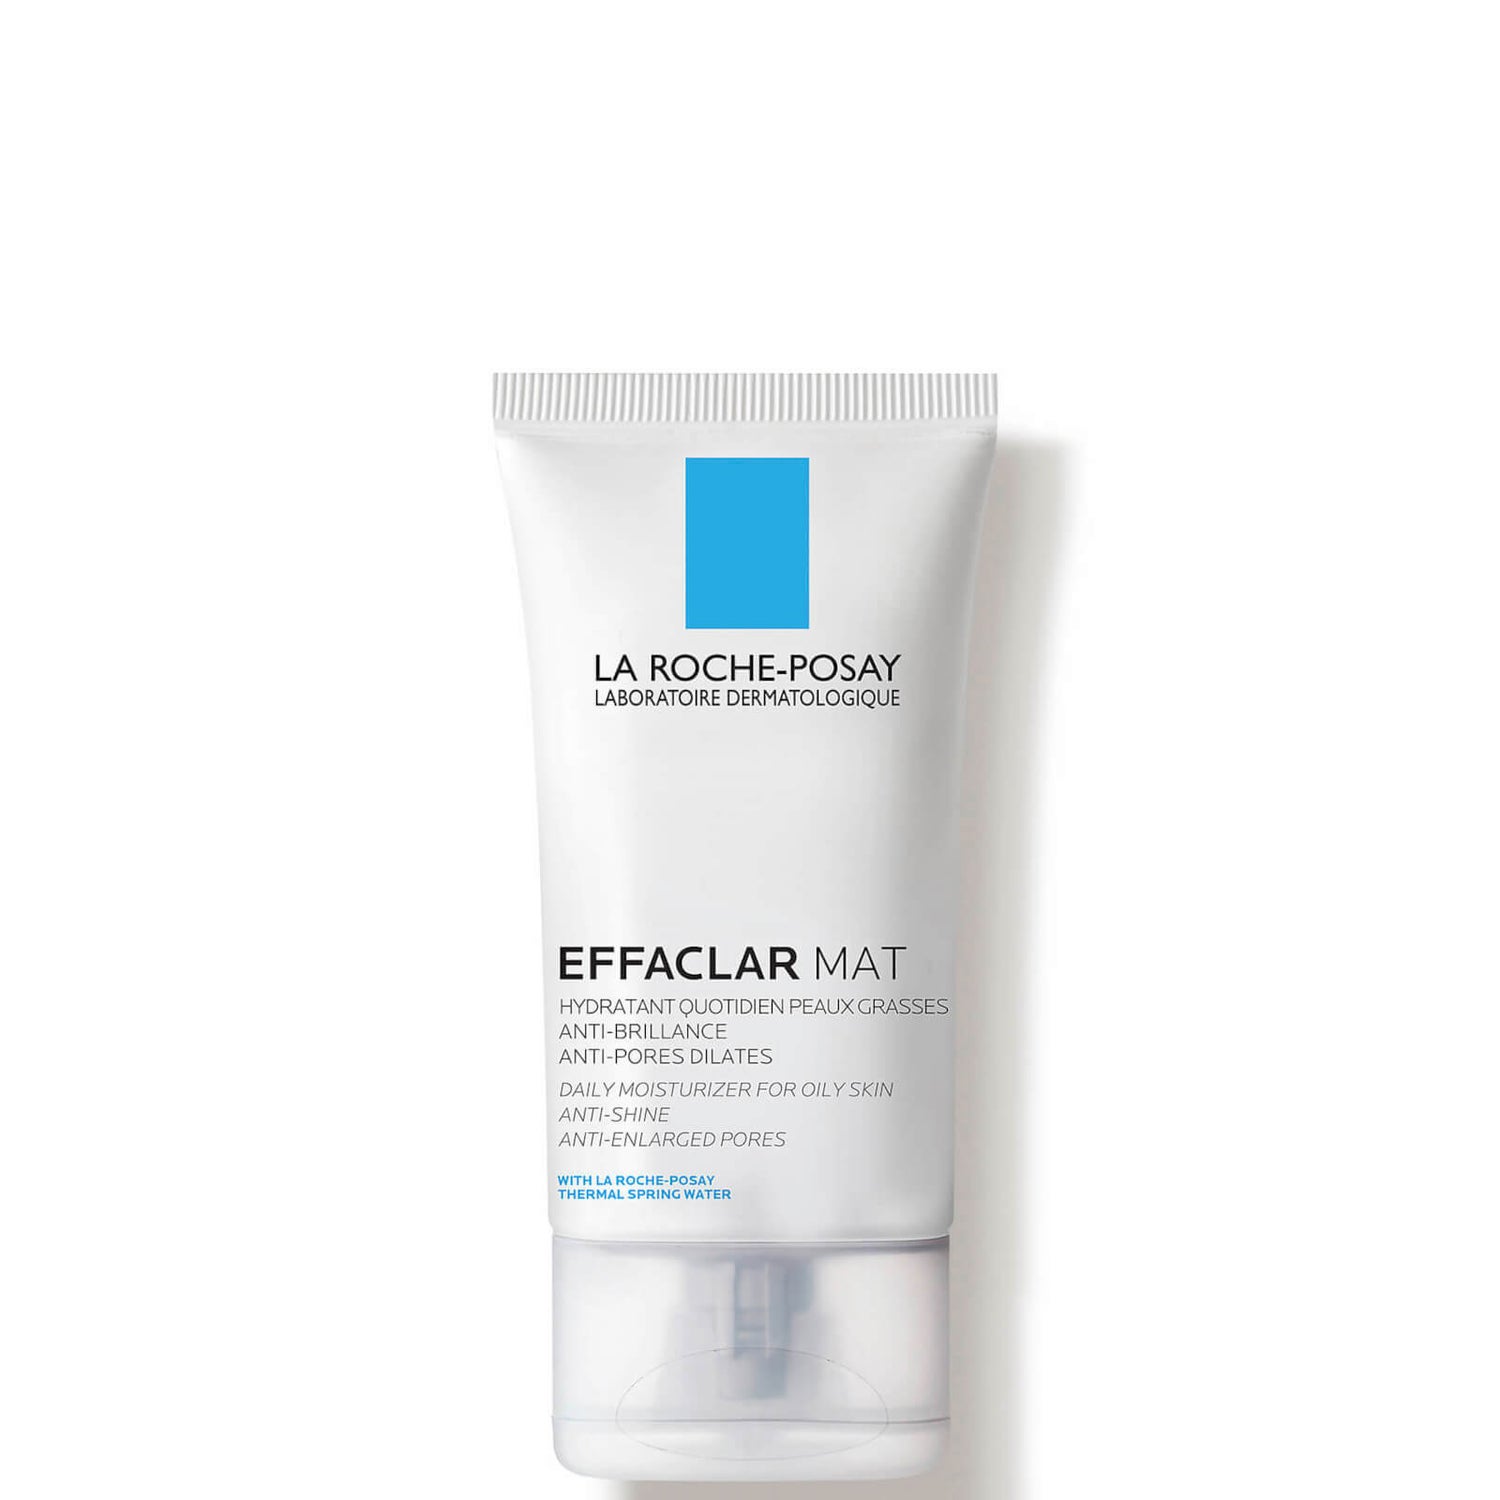 La Roche-Posay Effaclar Mat Daily Moisturizer for Oily Skin (1.35 fl. oz.)